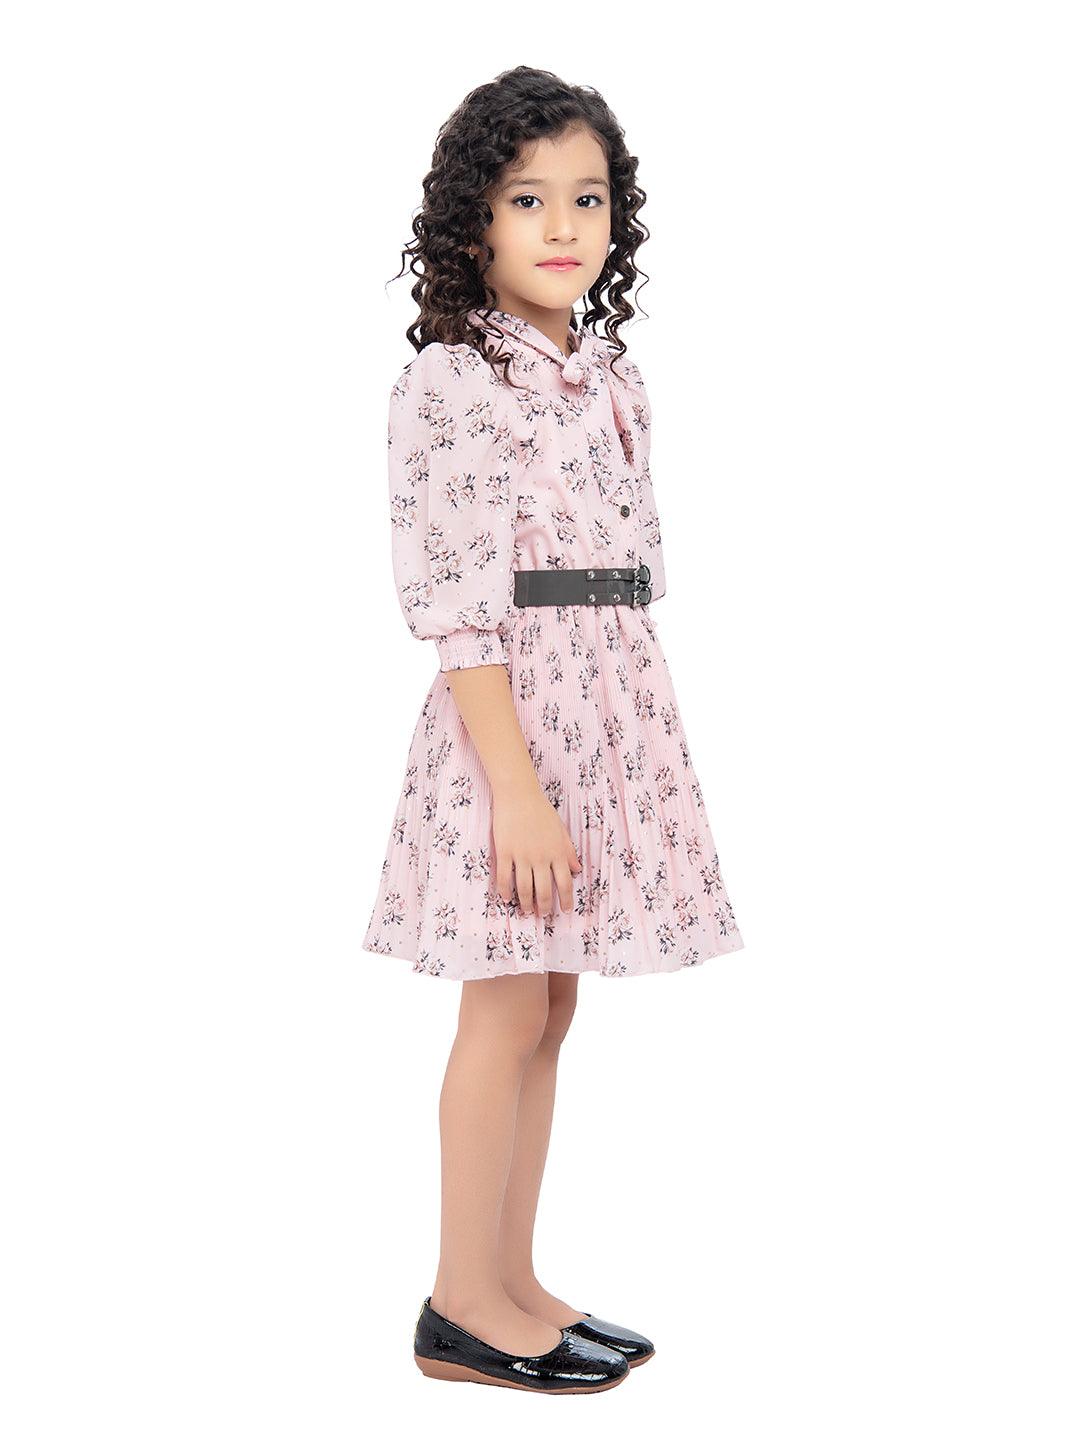 Tiny Baby Peach Colored Dress - 2150 Peach - TINY BABY INDIA shop.tinybaby.in